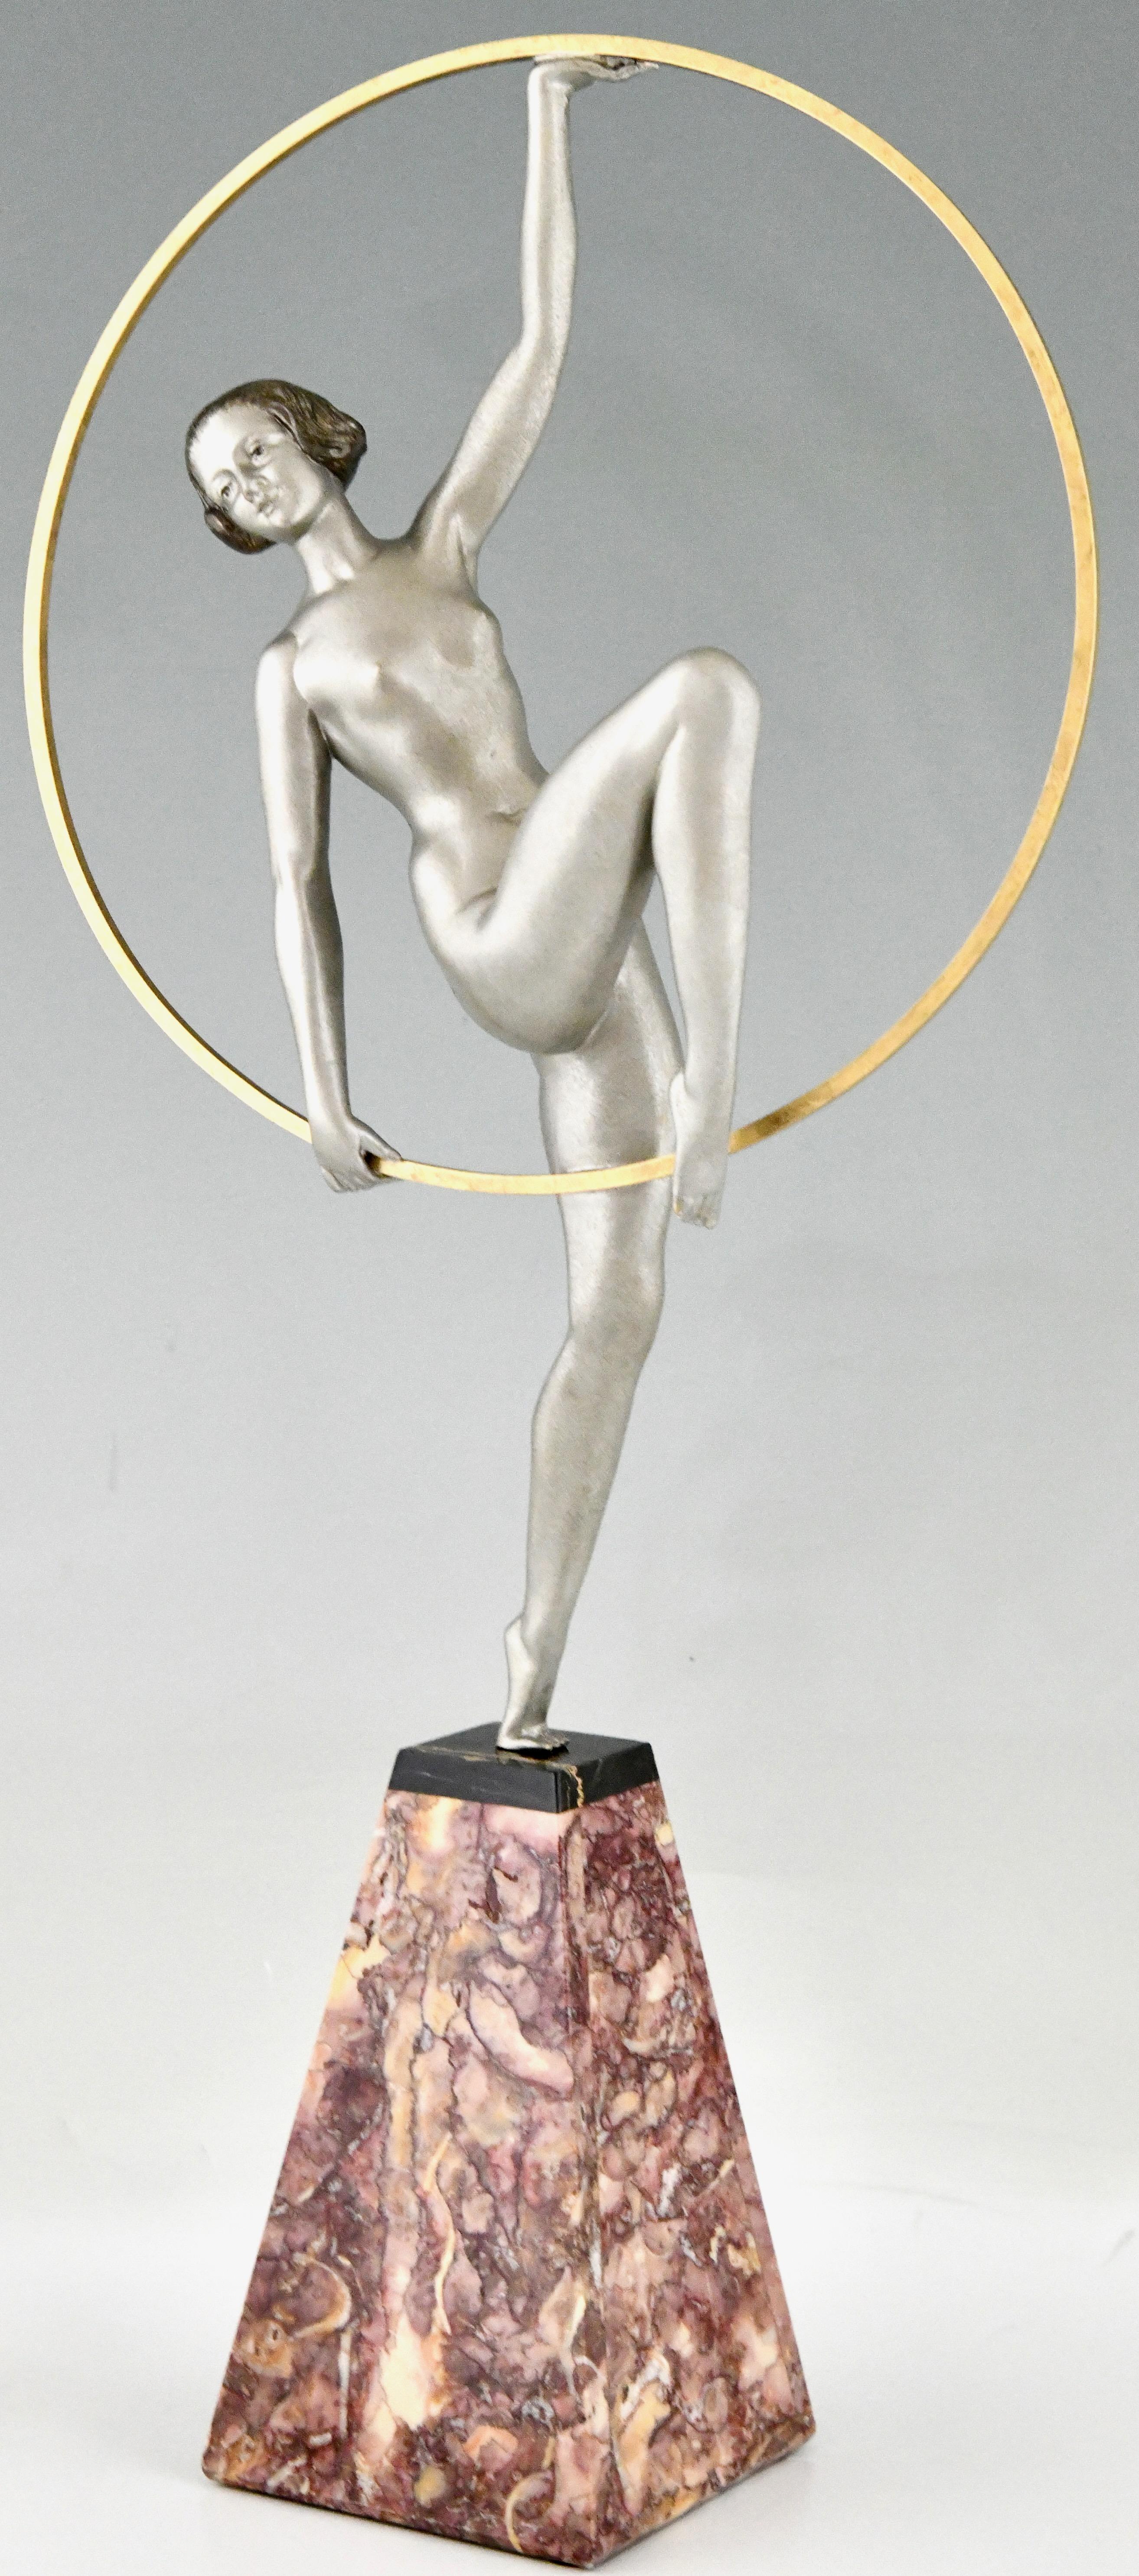 Art Deco sculpture hoop dancer by Limousin France 1930 For Sale 2